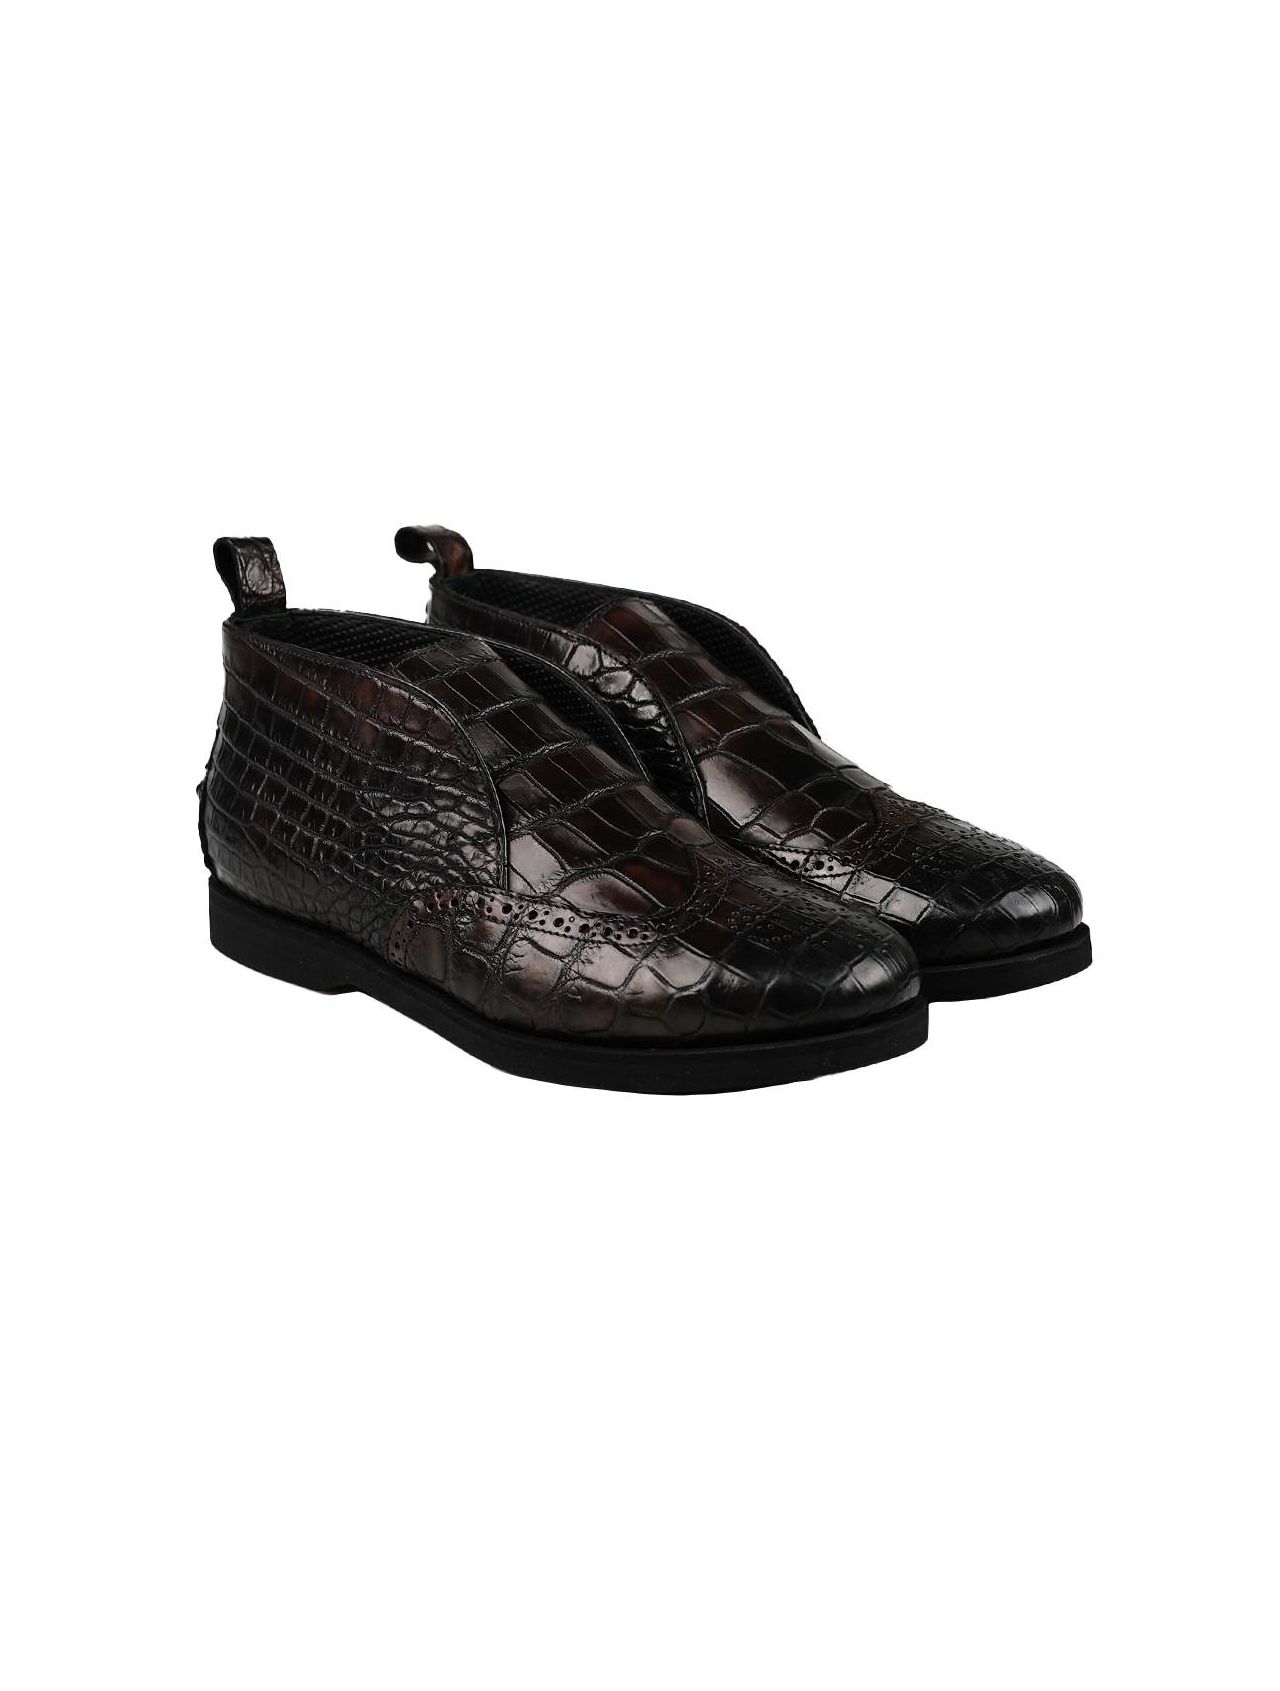 KITON Brown Leather Crocodile Shoes RAFFAELLO